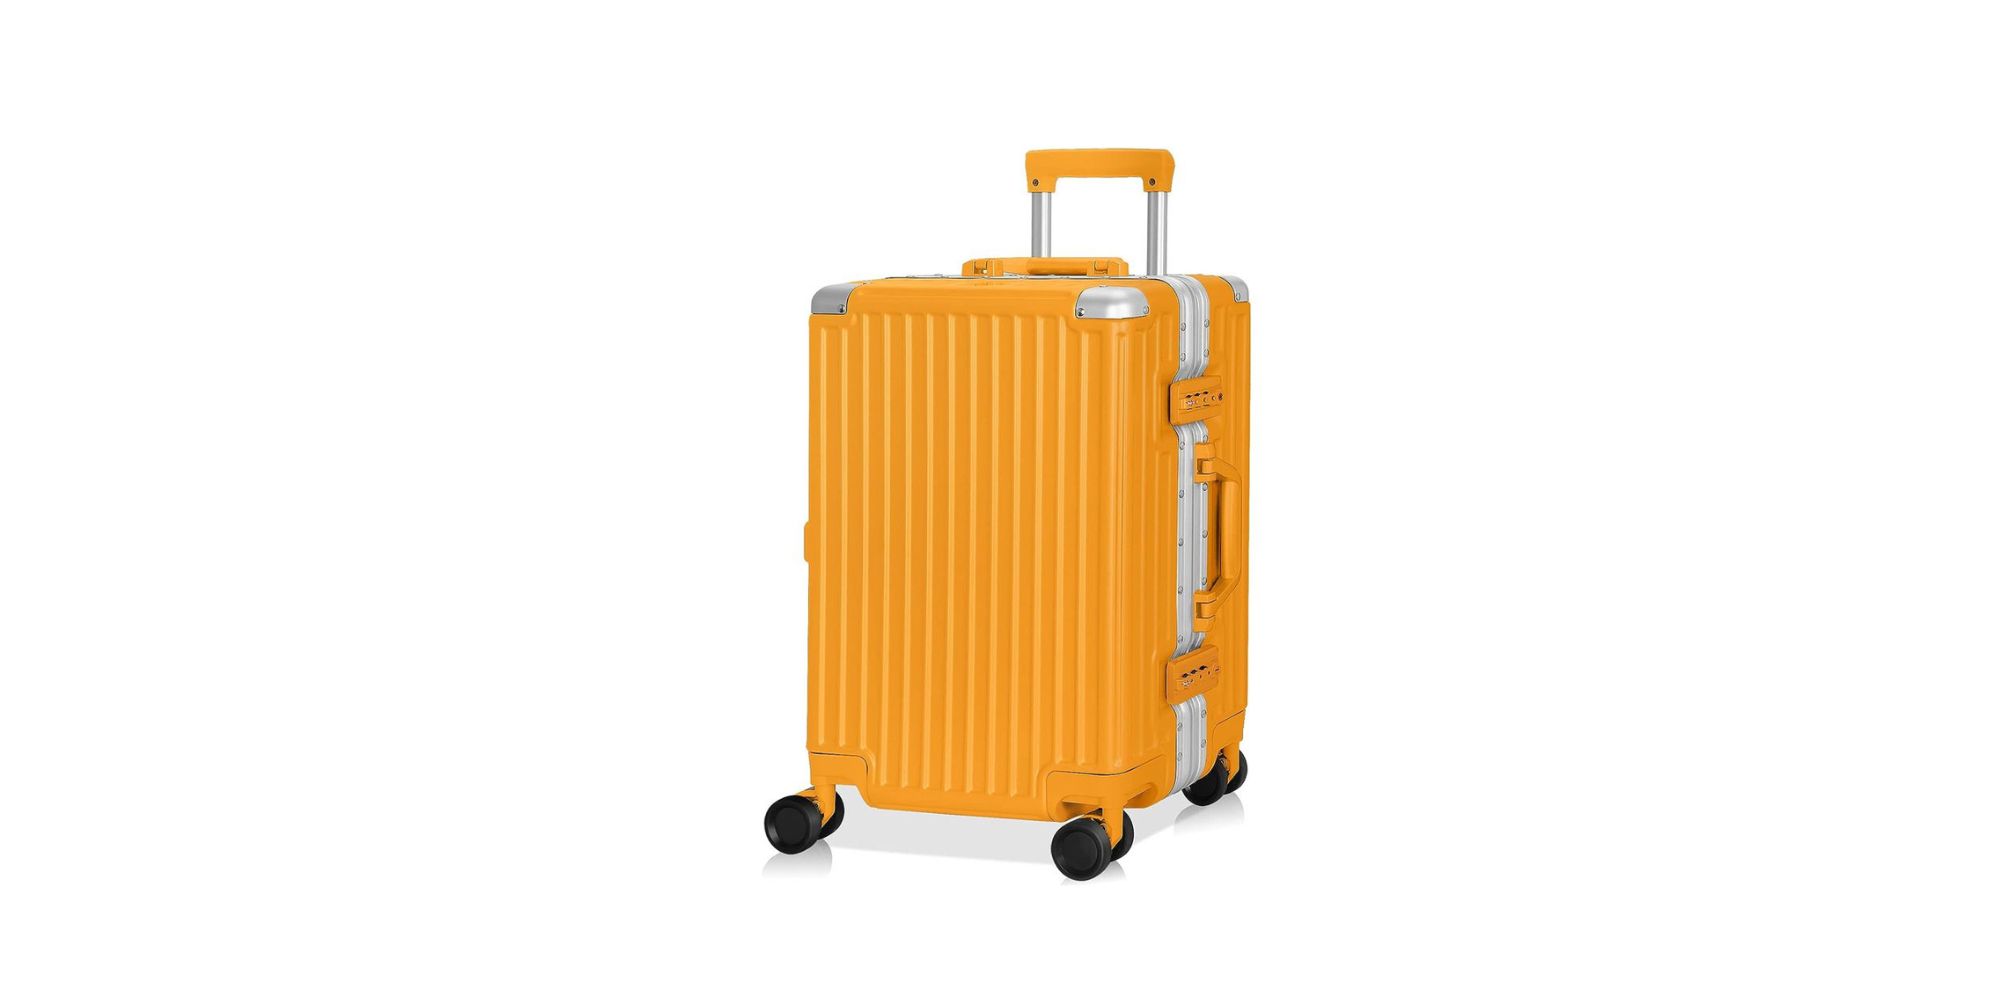 14 Best Zipperless Luggage for 2023 | TouristSecrets